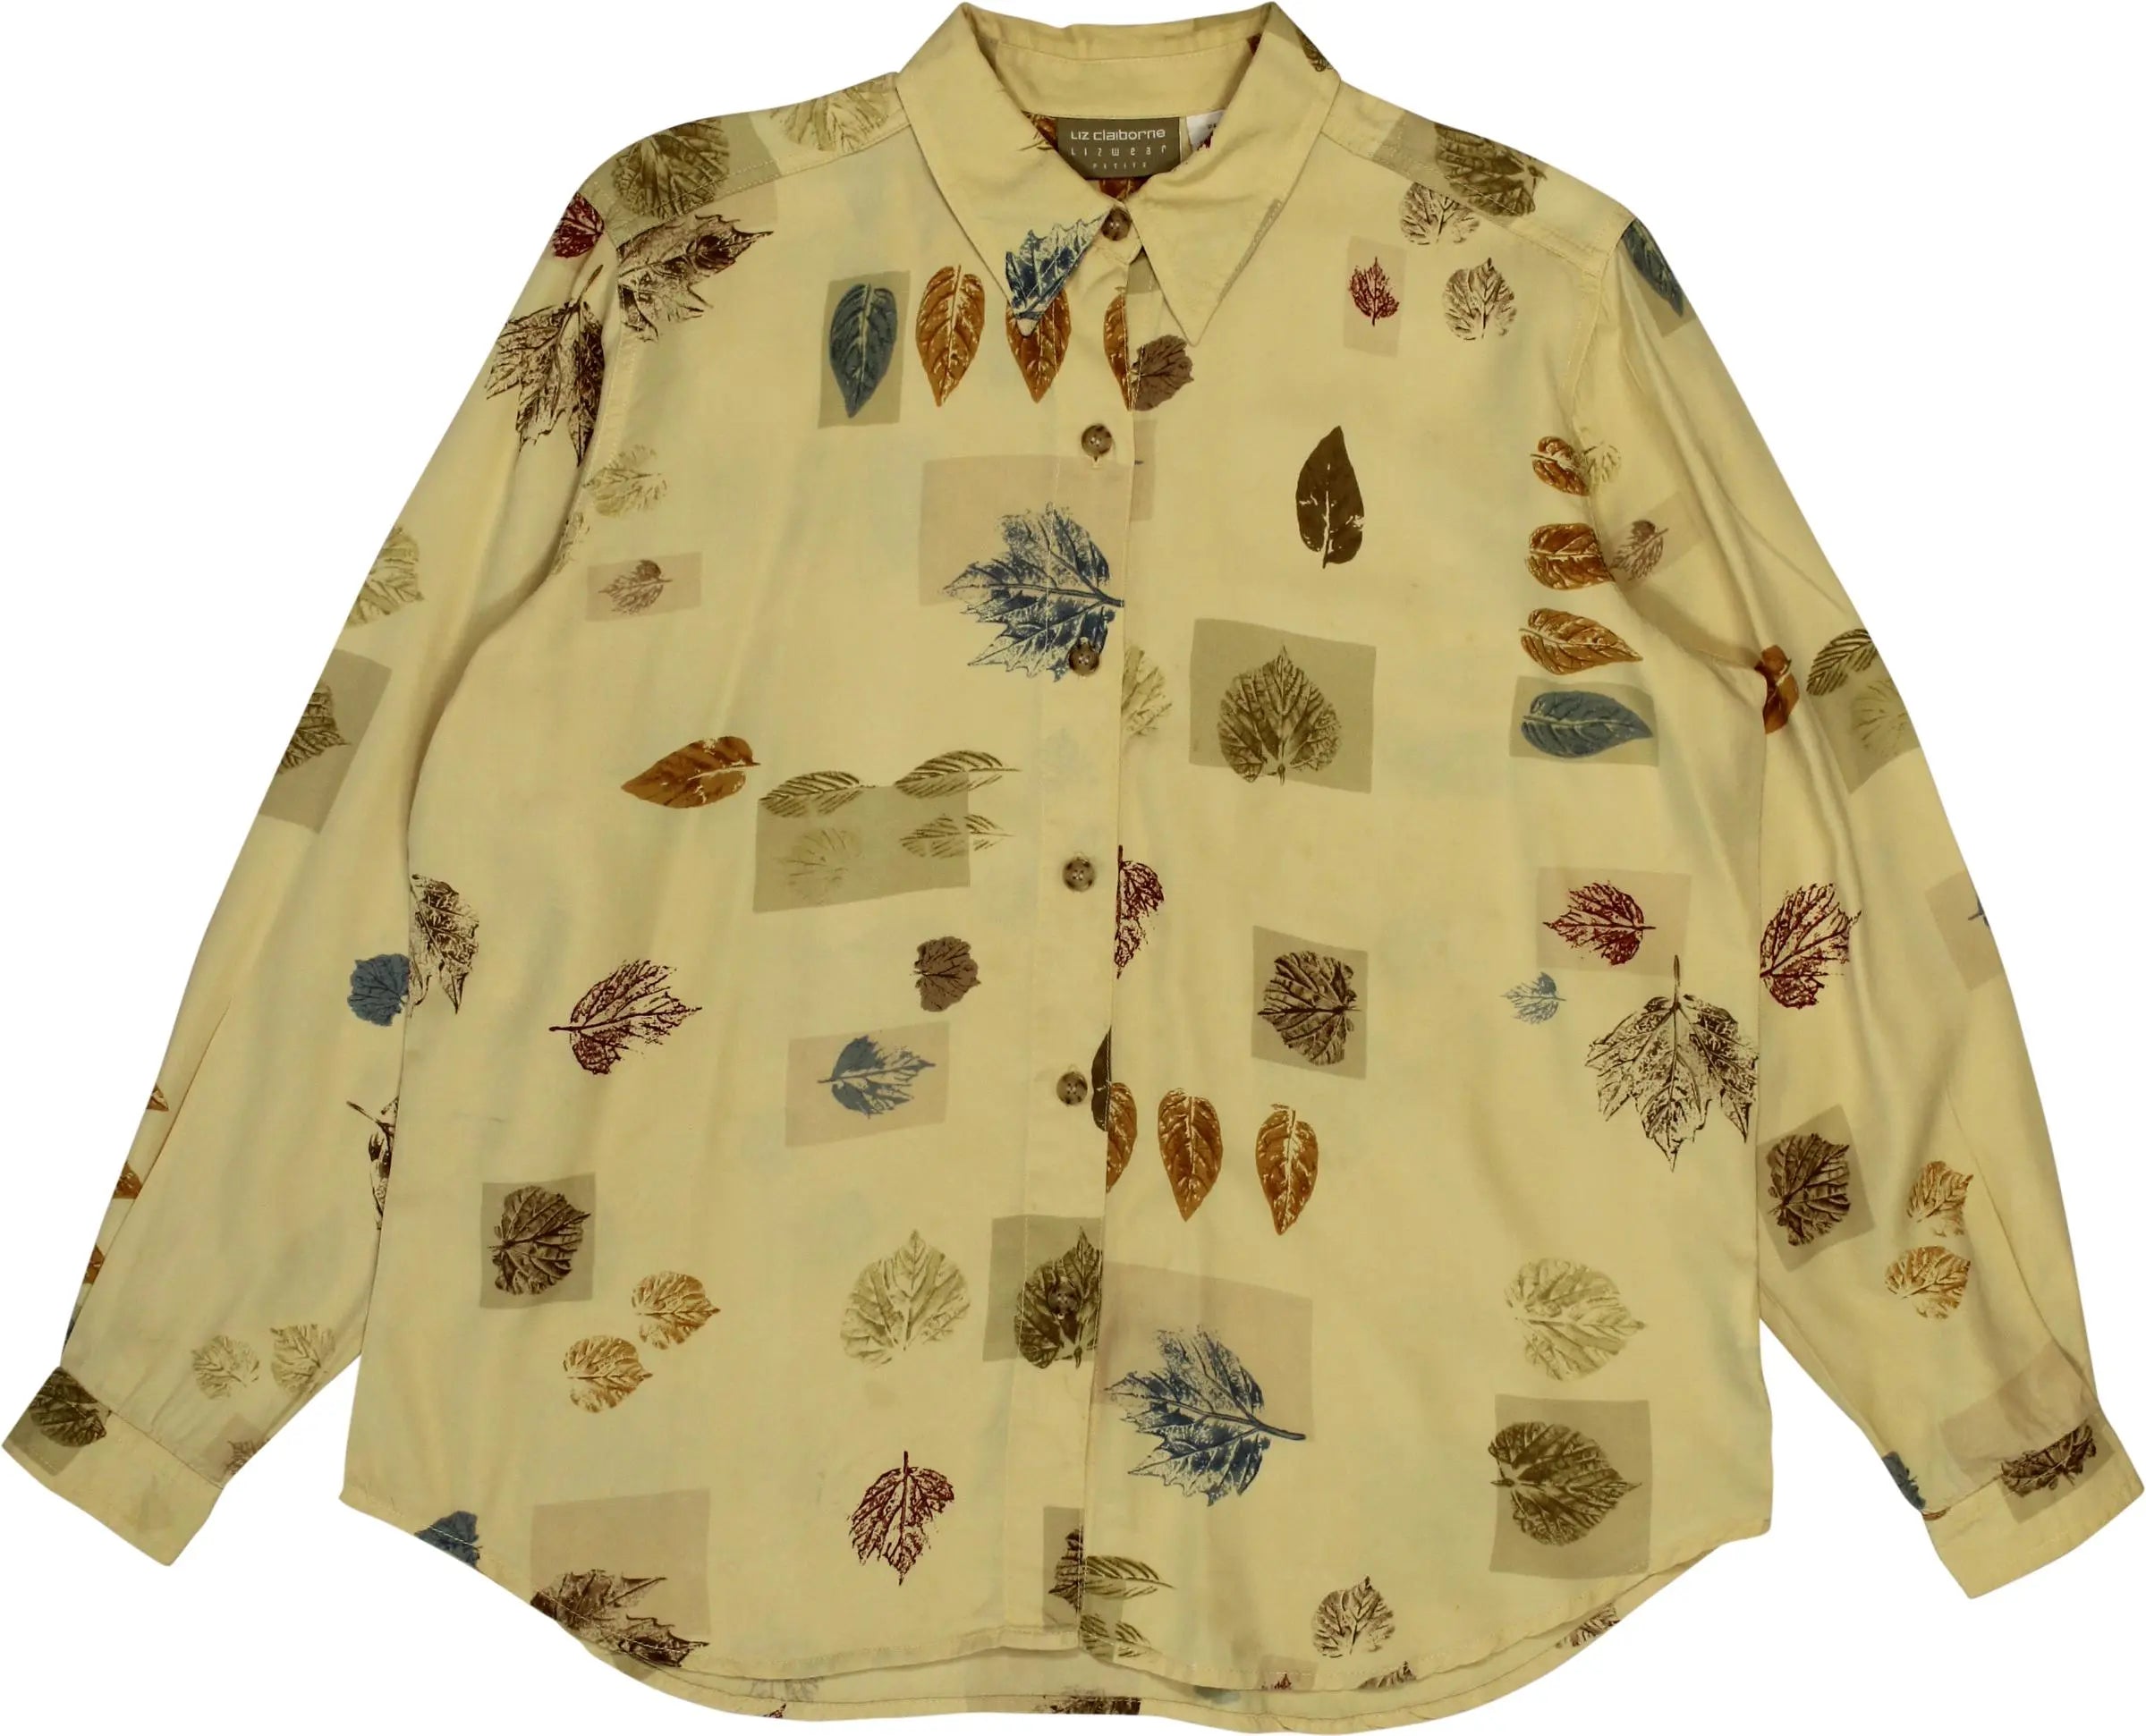 Liz Claiborne - 90s Patterned Blouse- ThriftTale.com - Vintage and second handclothing